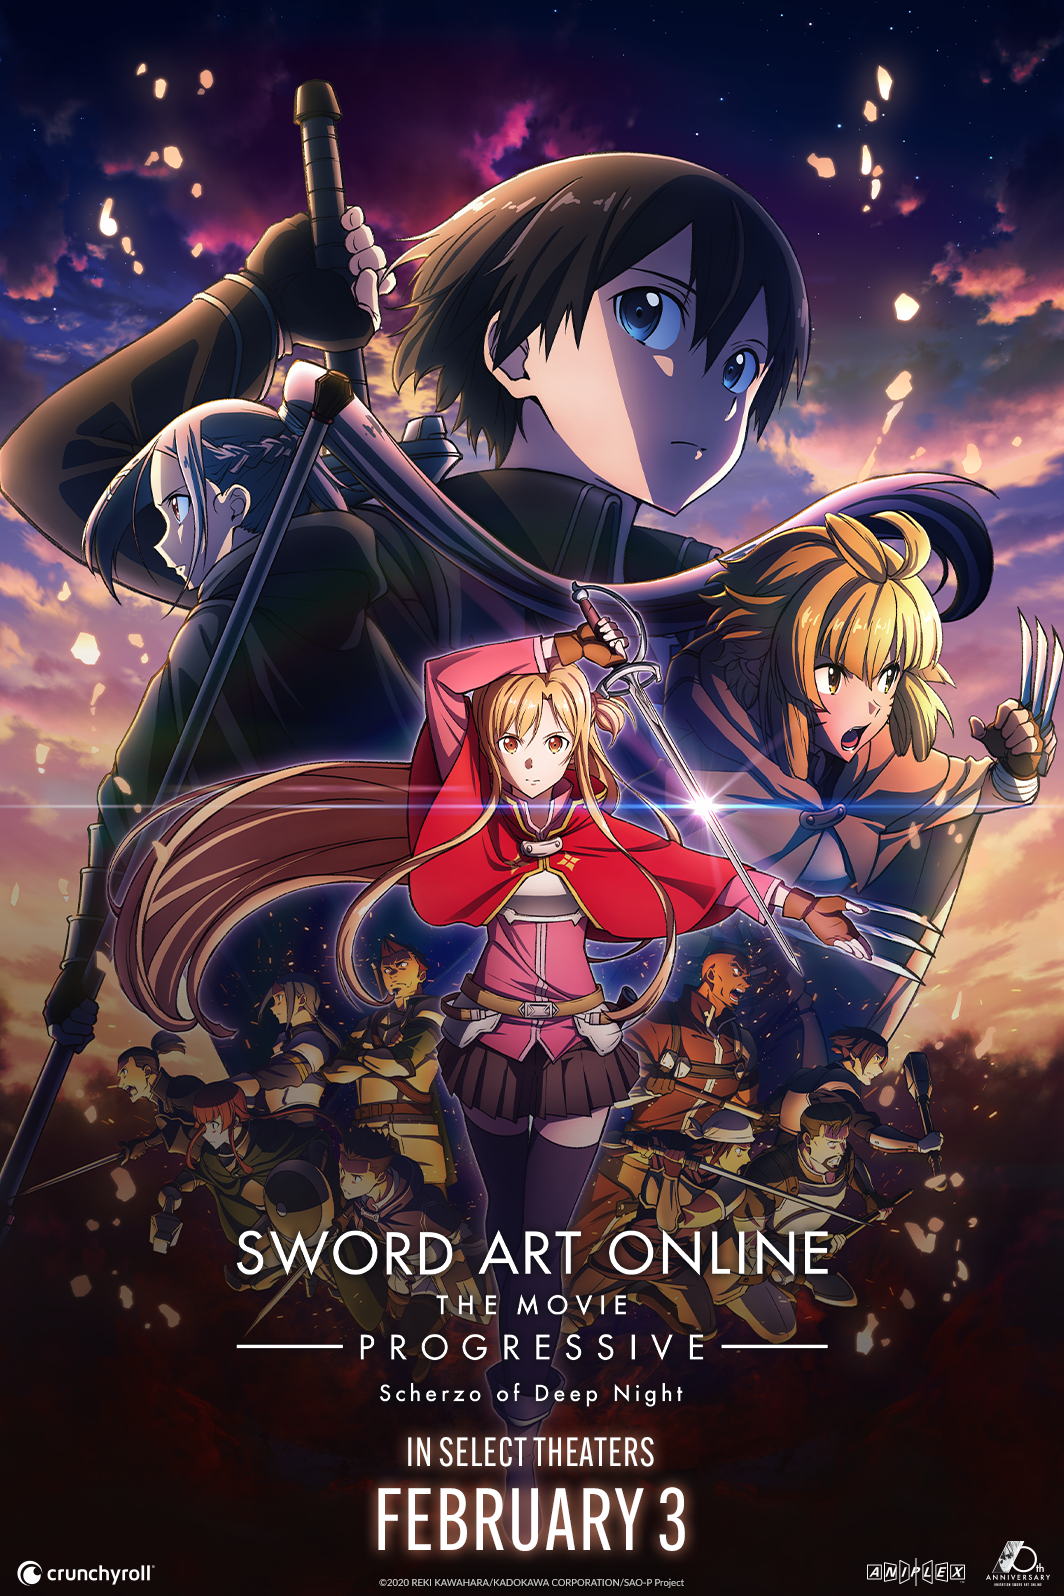 Sword Art Online Progressive Gets US Theater Release Date - Siliconera